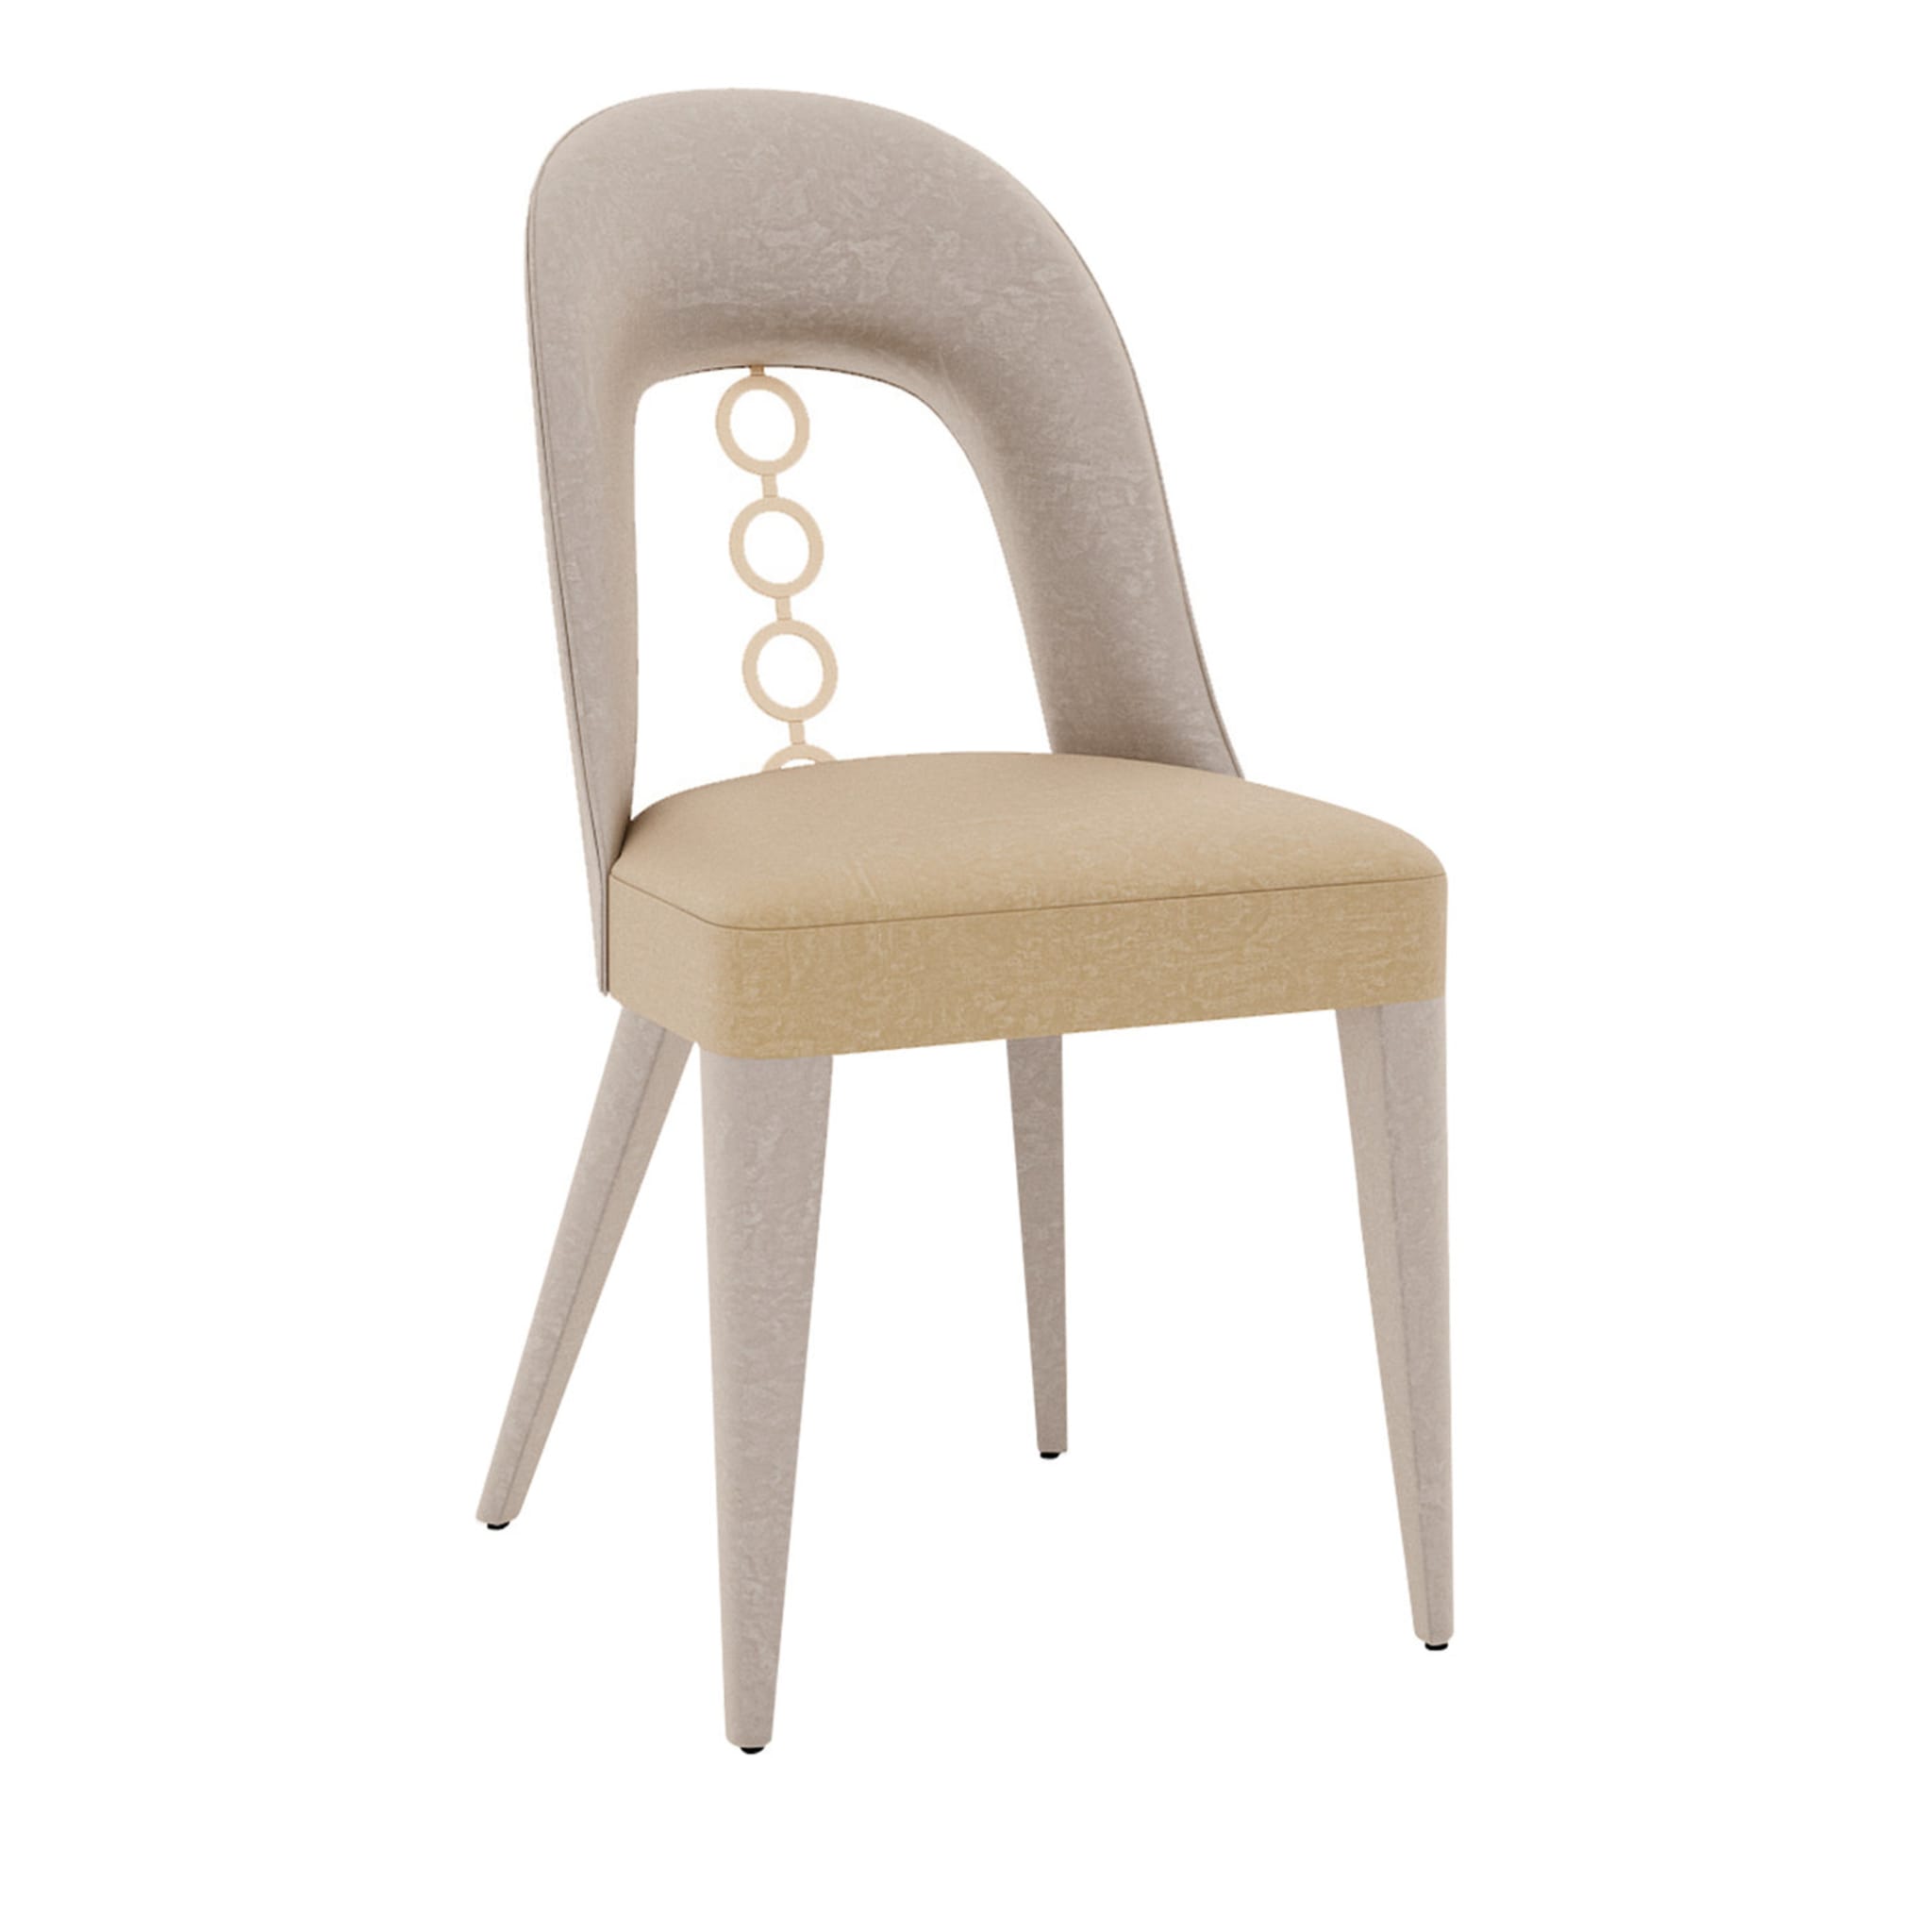 Liza Chair by Giannella Ventura - Main view